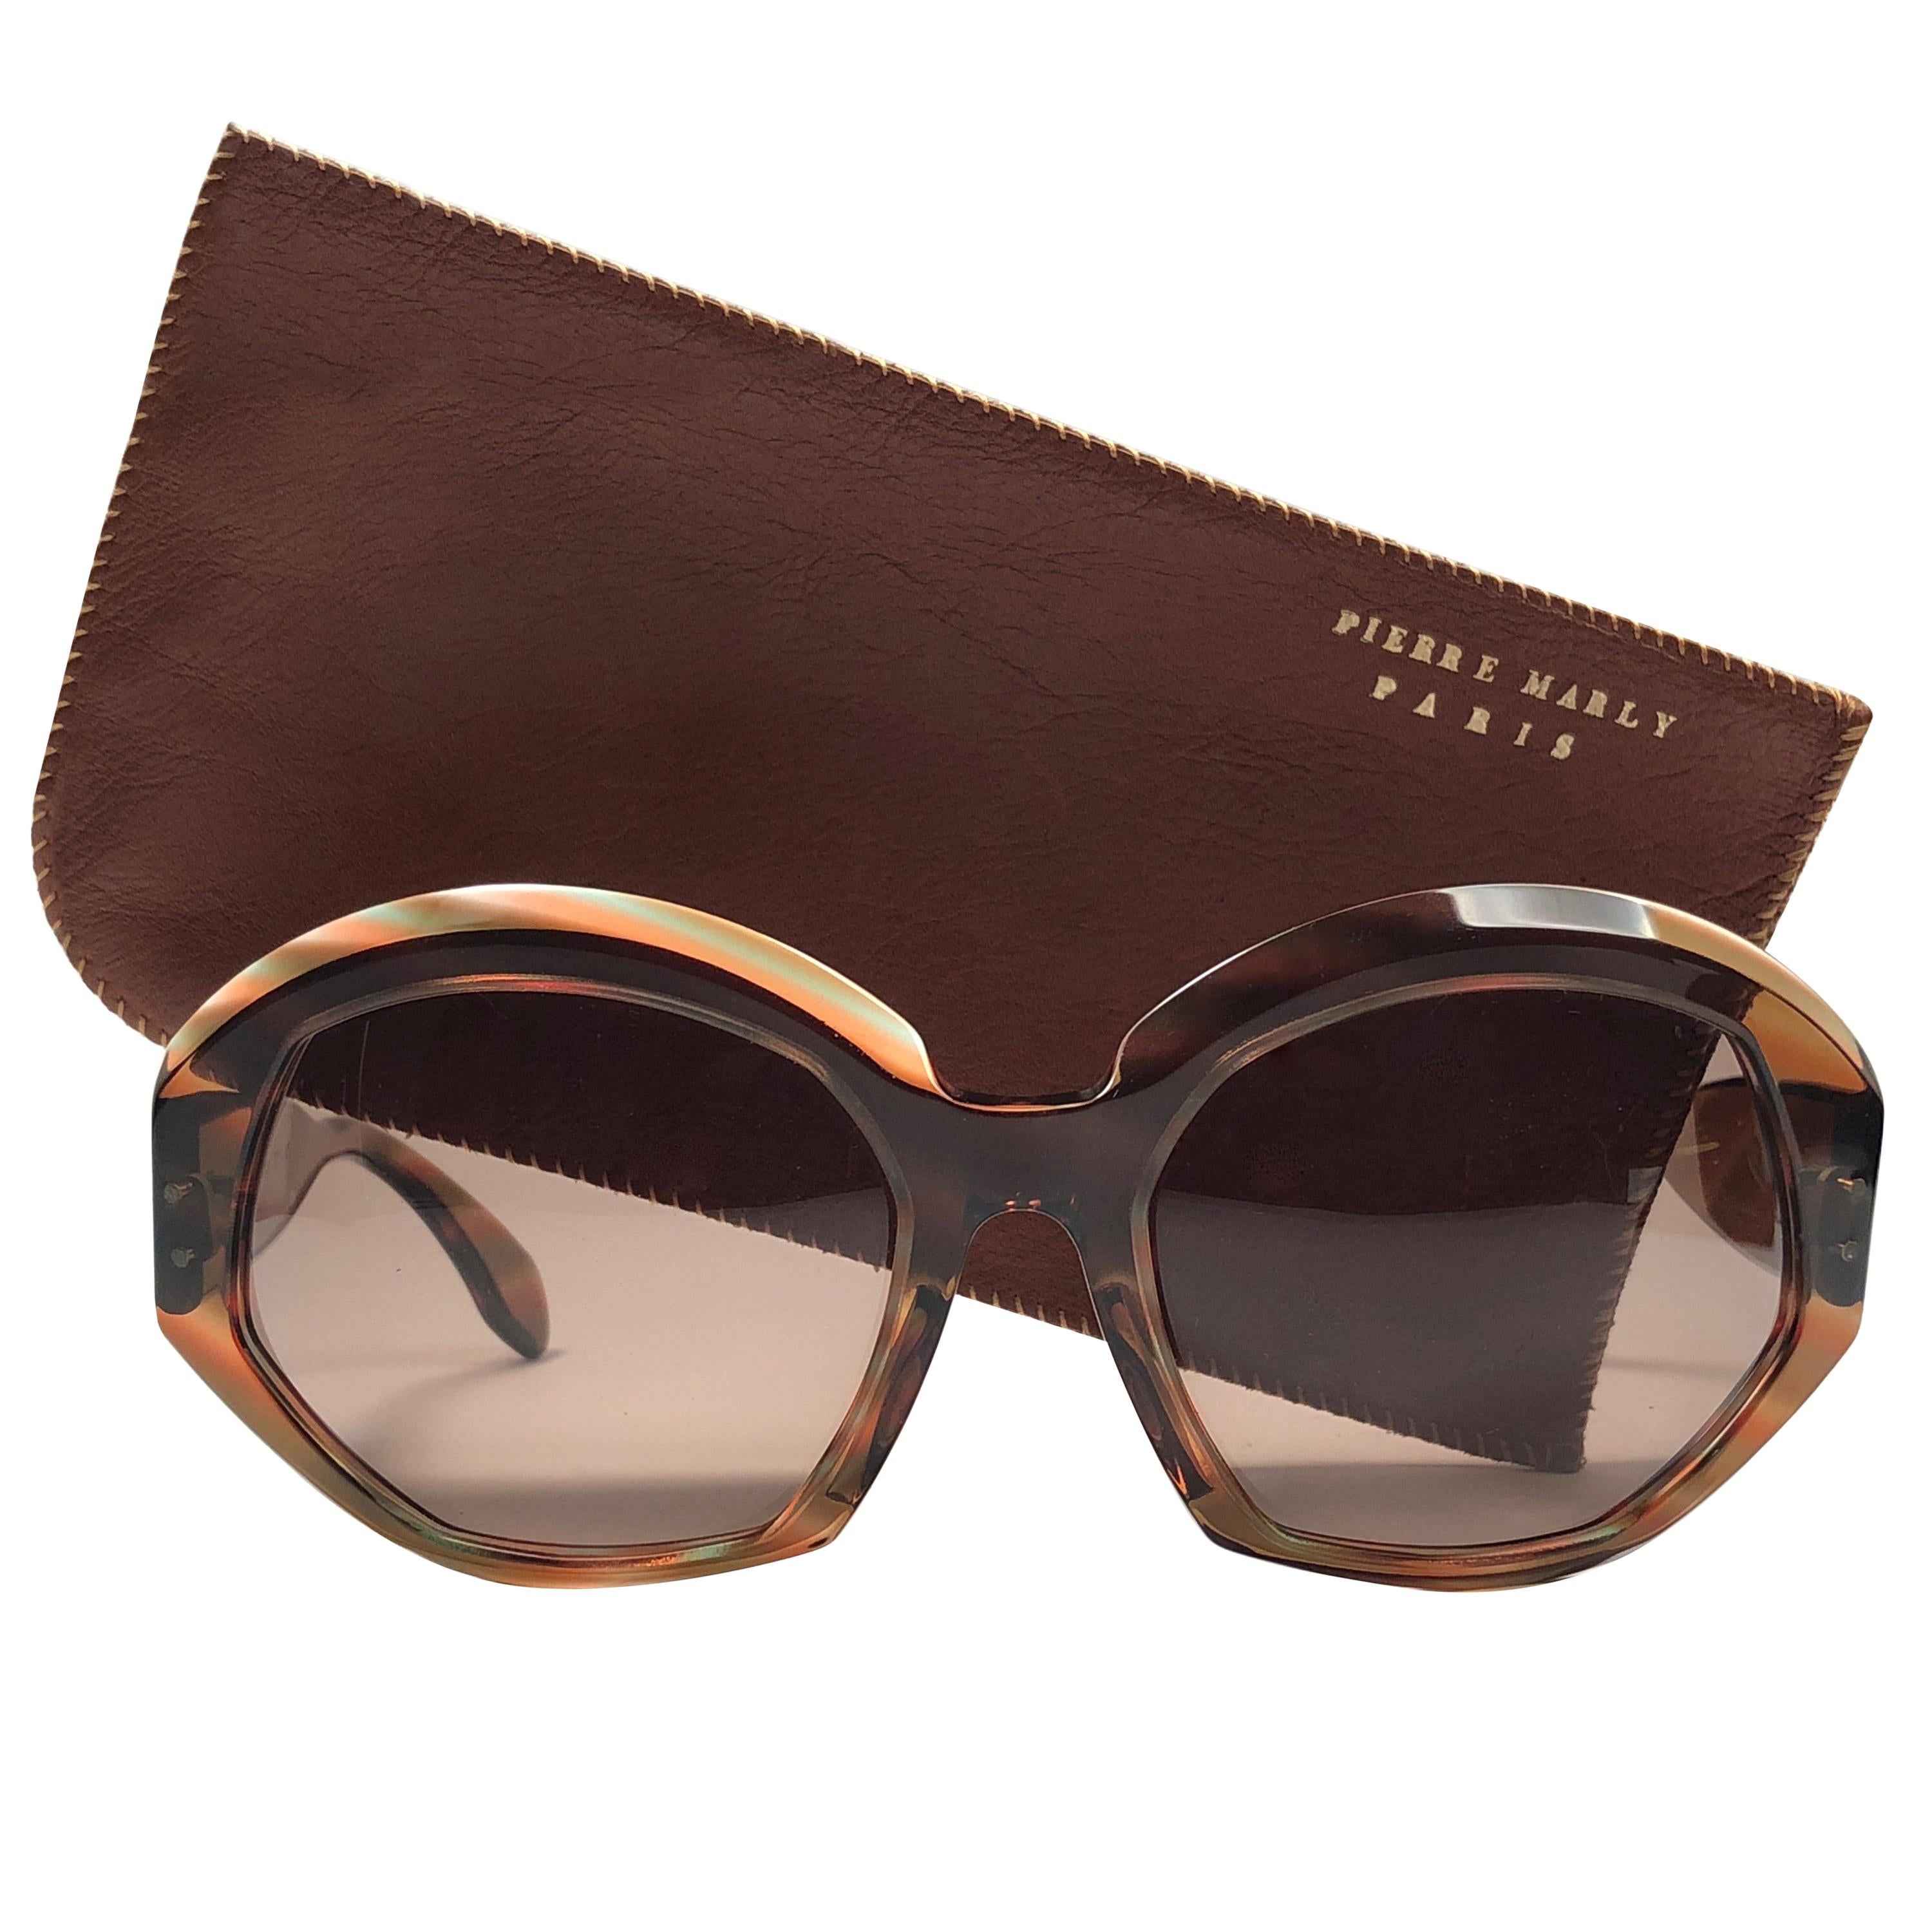 New Vintage Rare Pierre Marly " Penela " Avantgarde 1960 Sunglasses For Sale